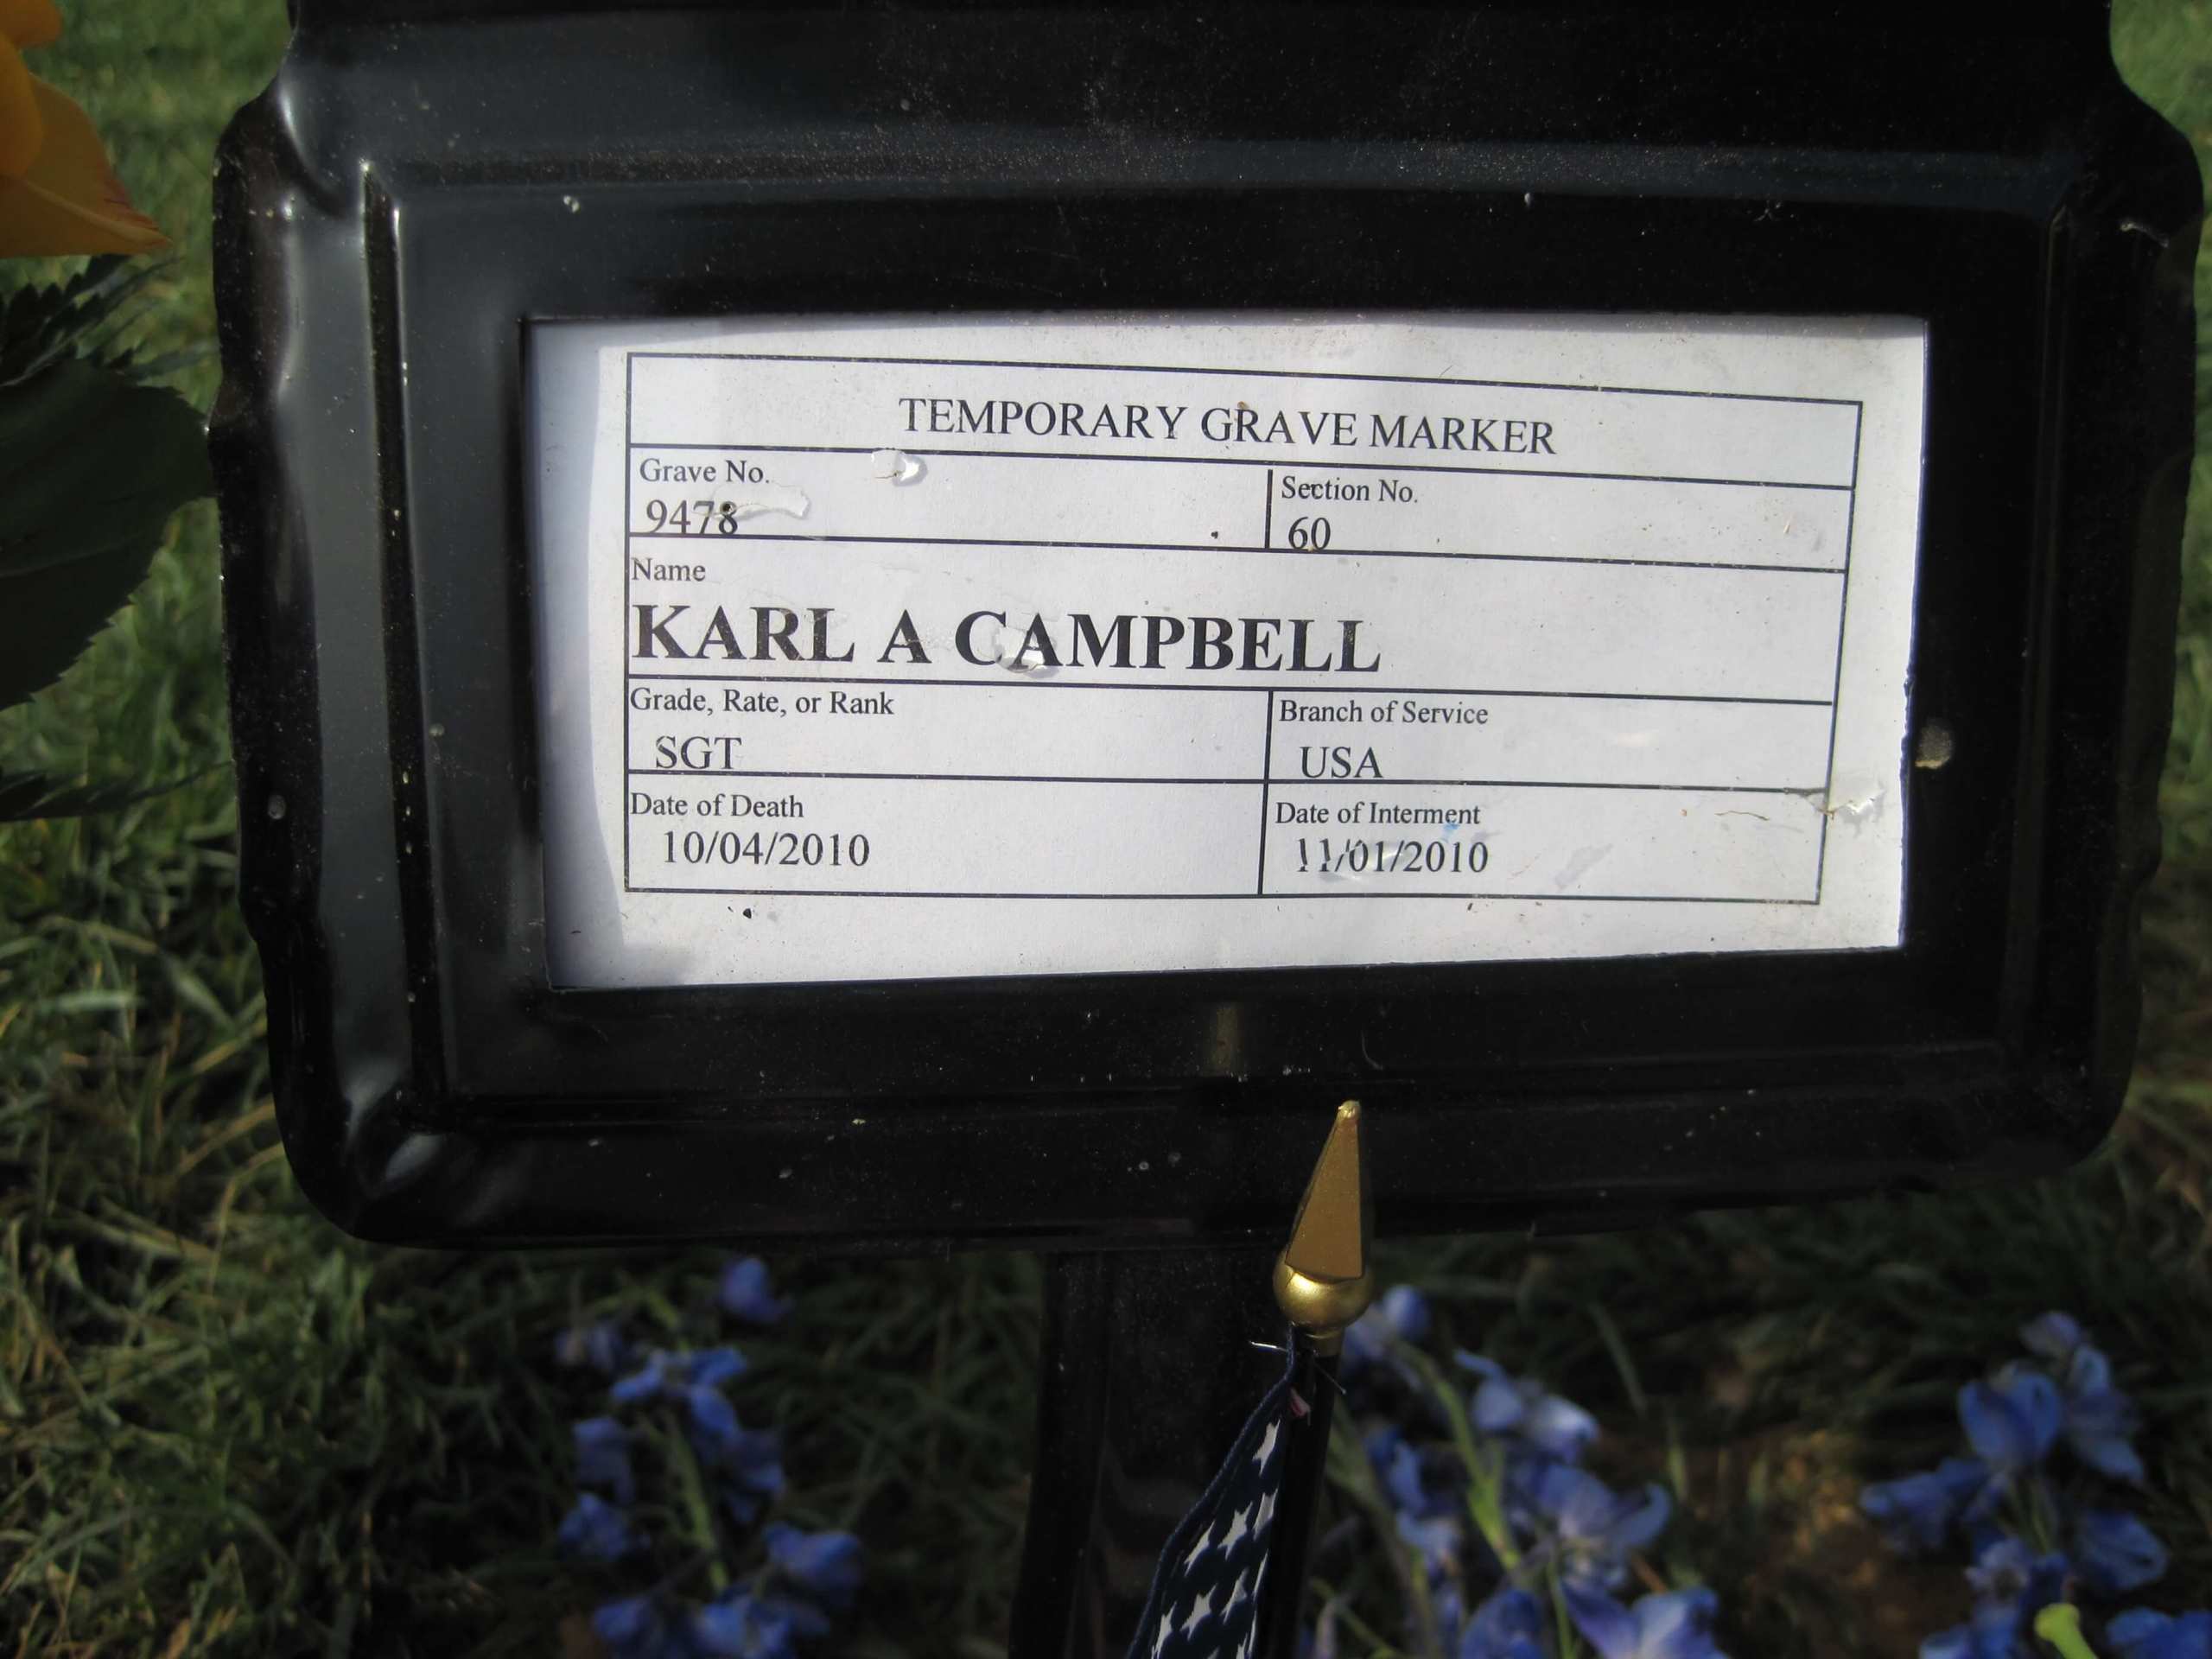 kacampbell-gravesite-photo-by-eileen-horan-november-2010-003